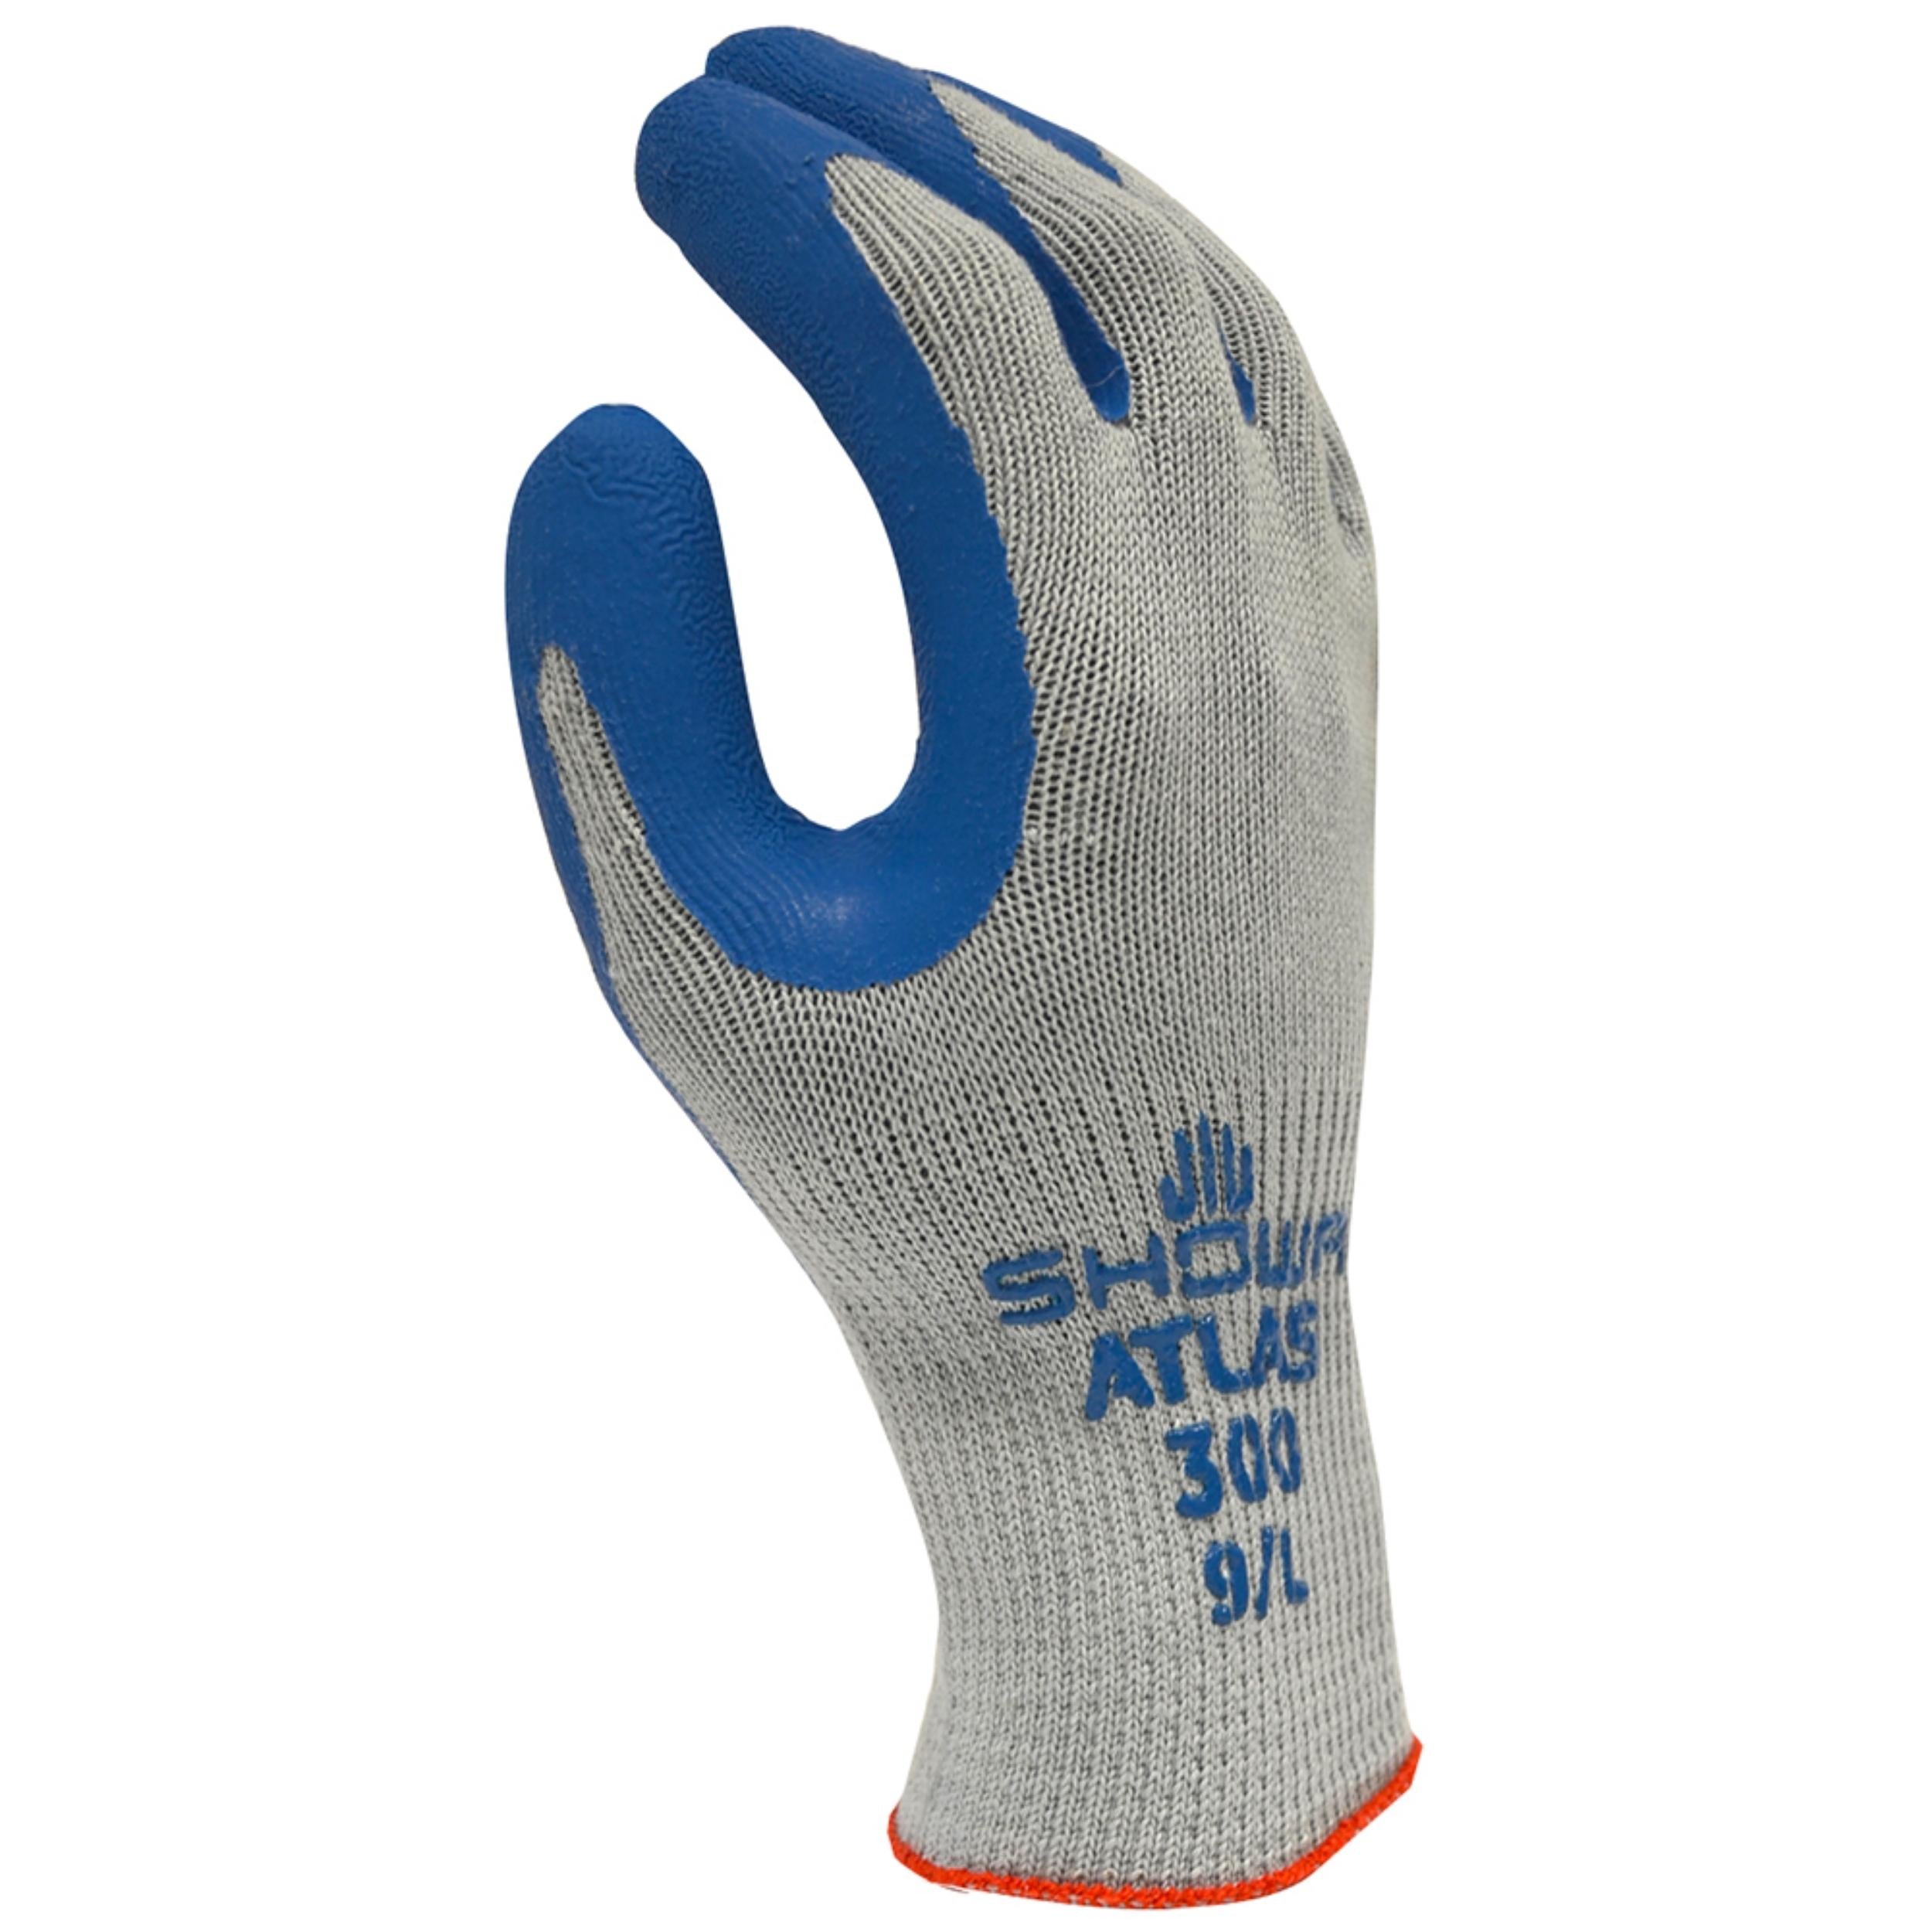 SHOWA ATLAS® 300 - General Purpose Gloves 12 Pack